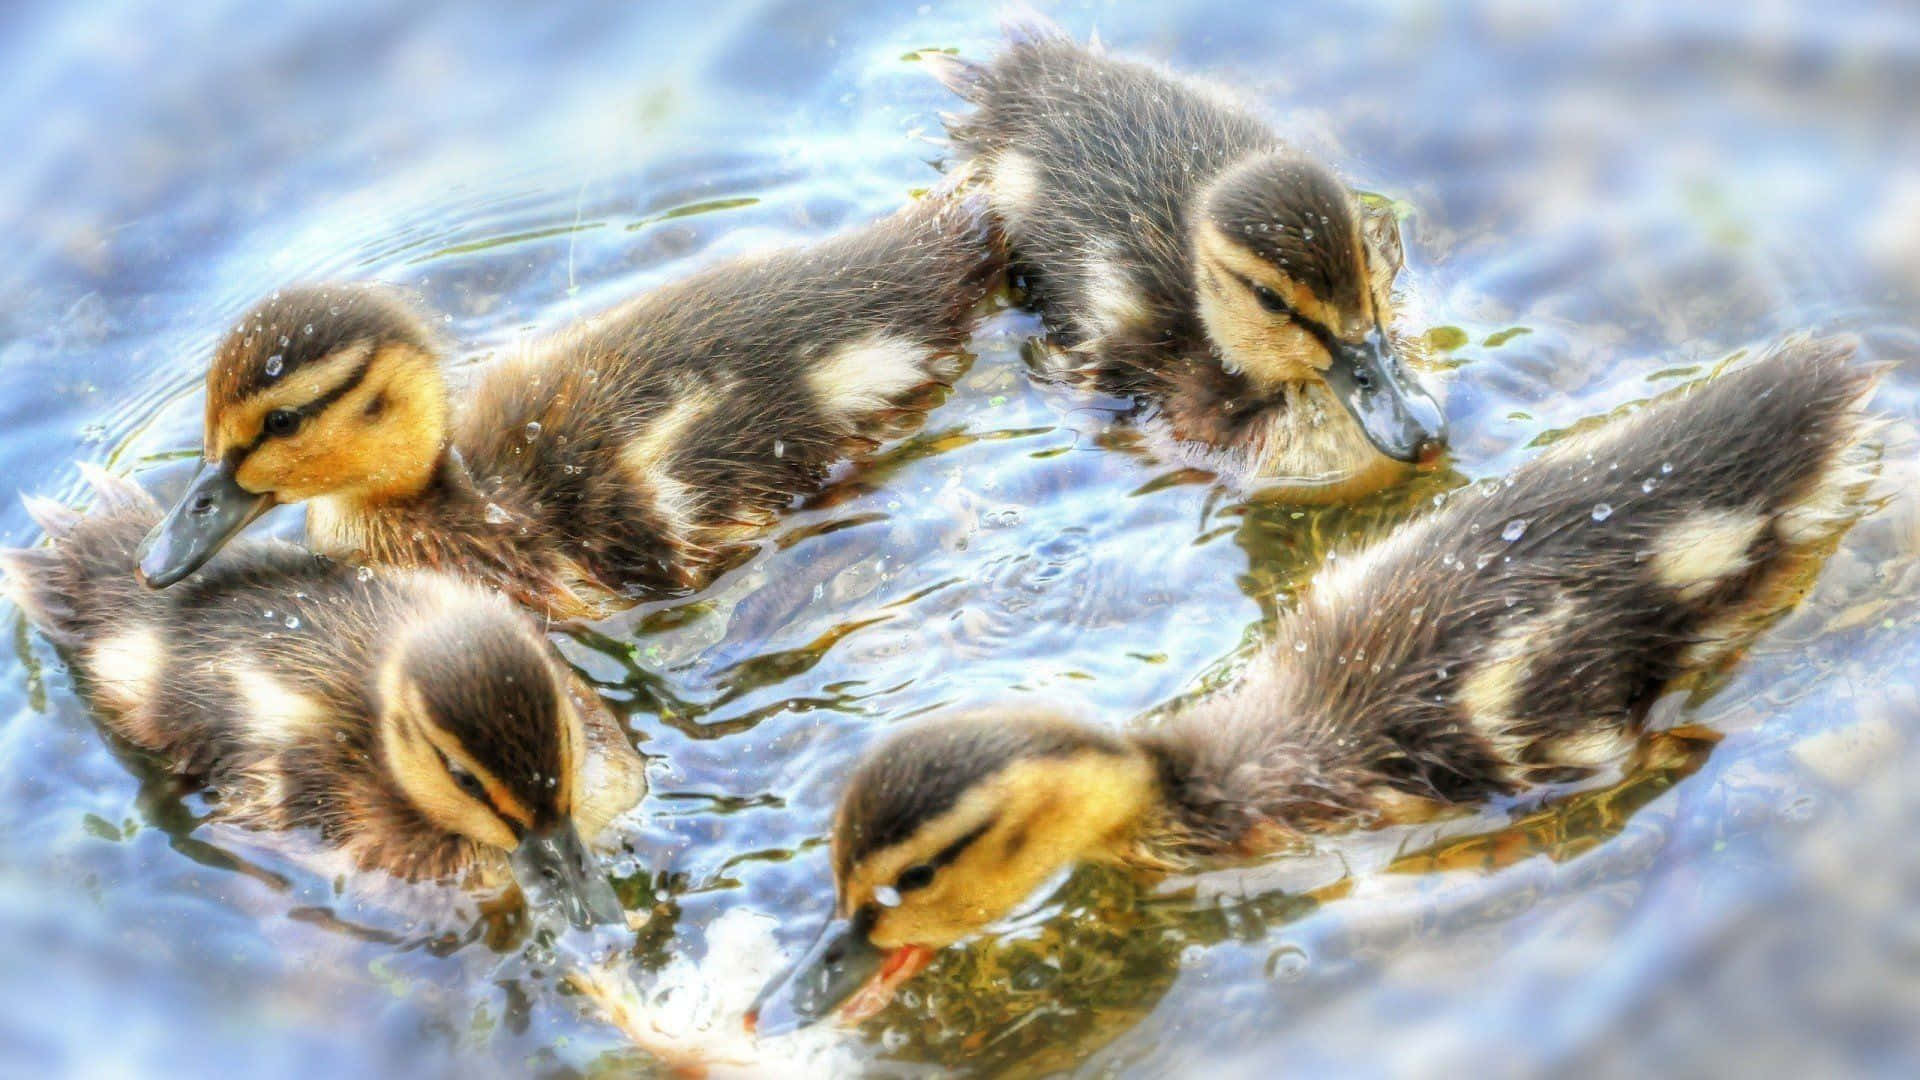 Adorable Duckling Splashing Around